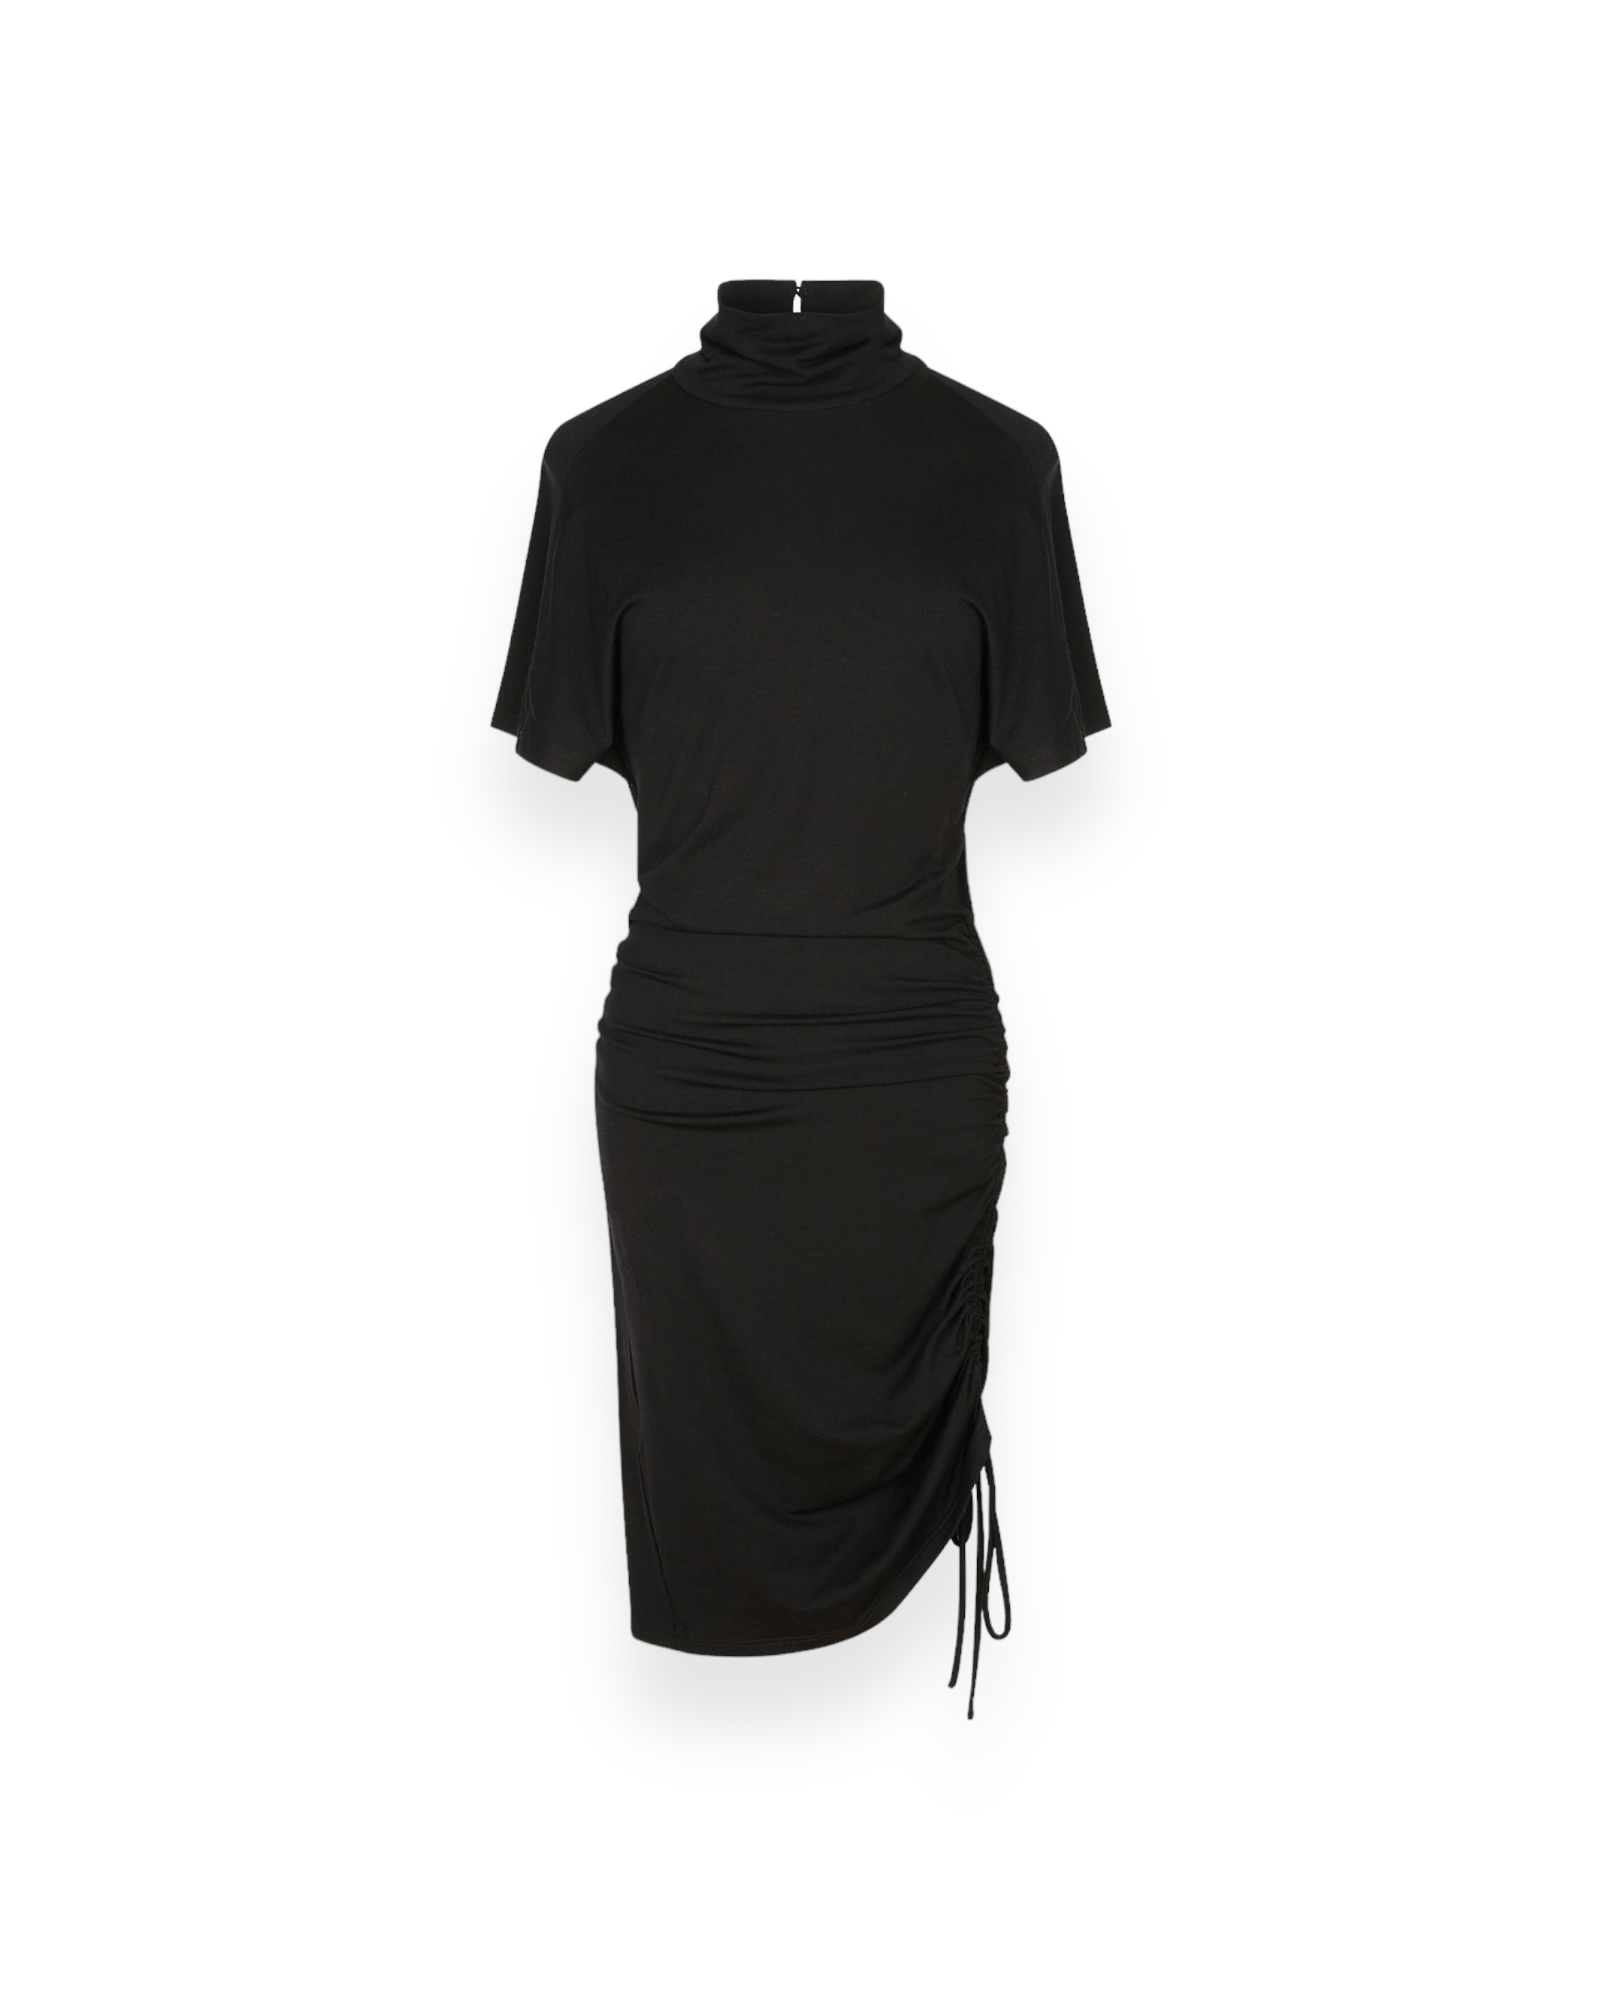 Kleid Lya in Black, MARANT ETOILE, RO0164FA-A3K21E LYA